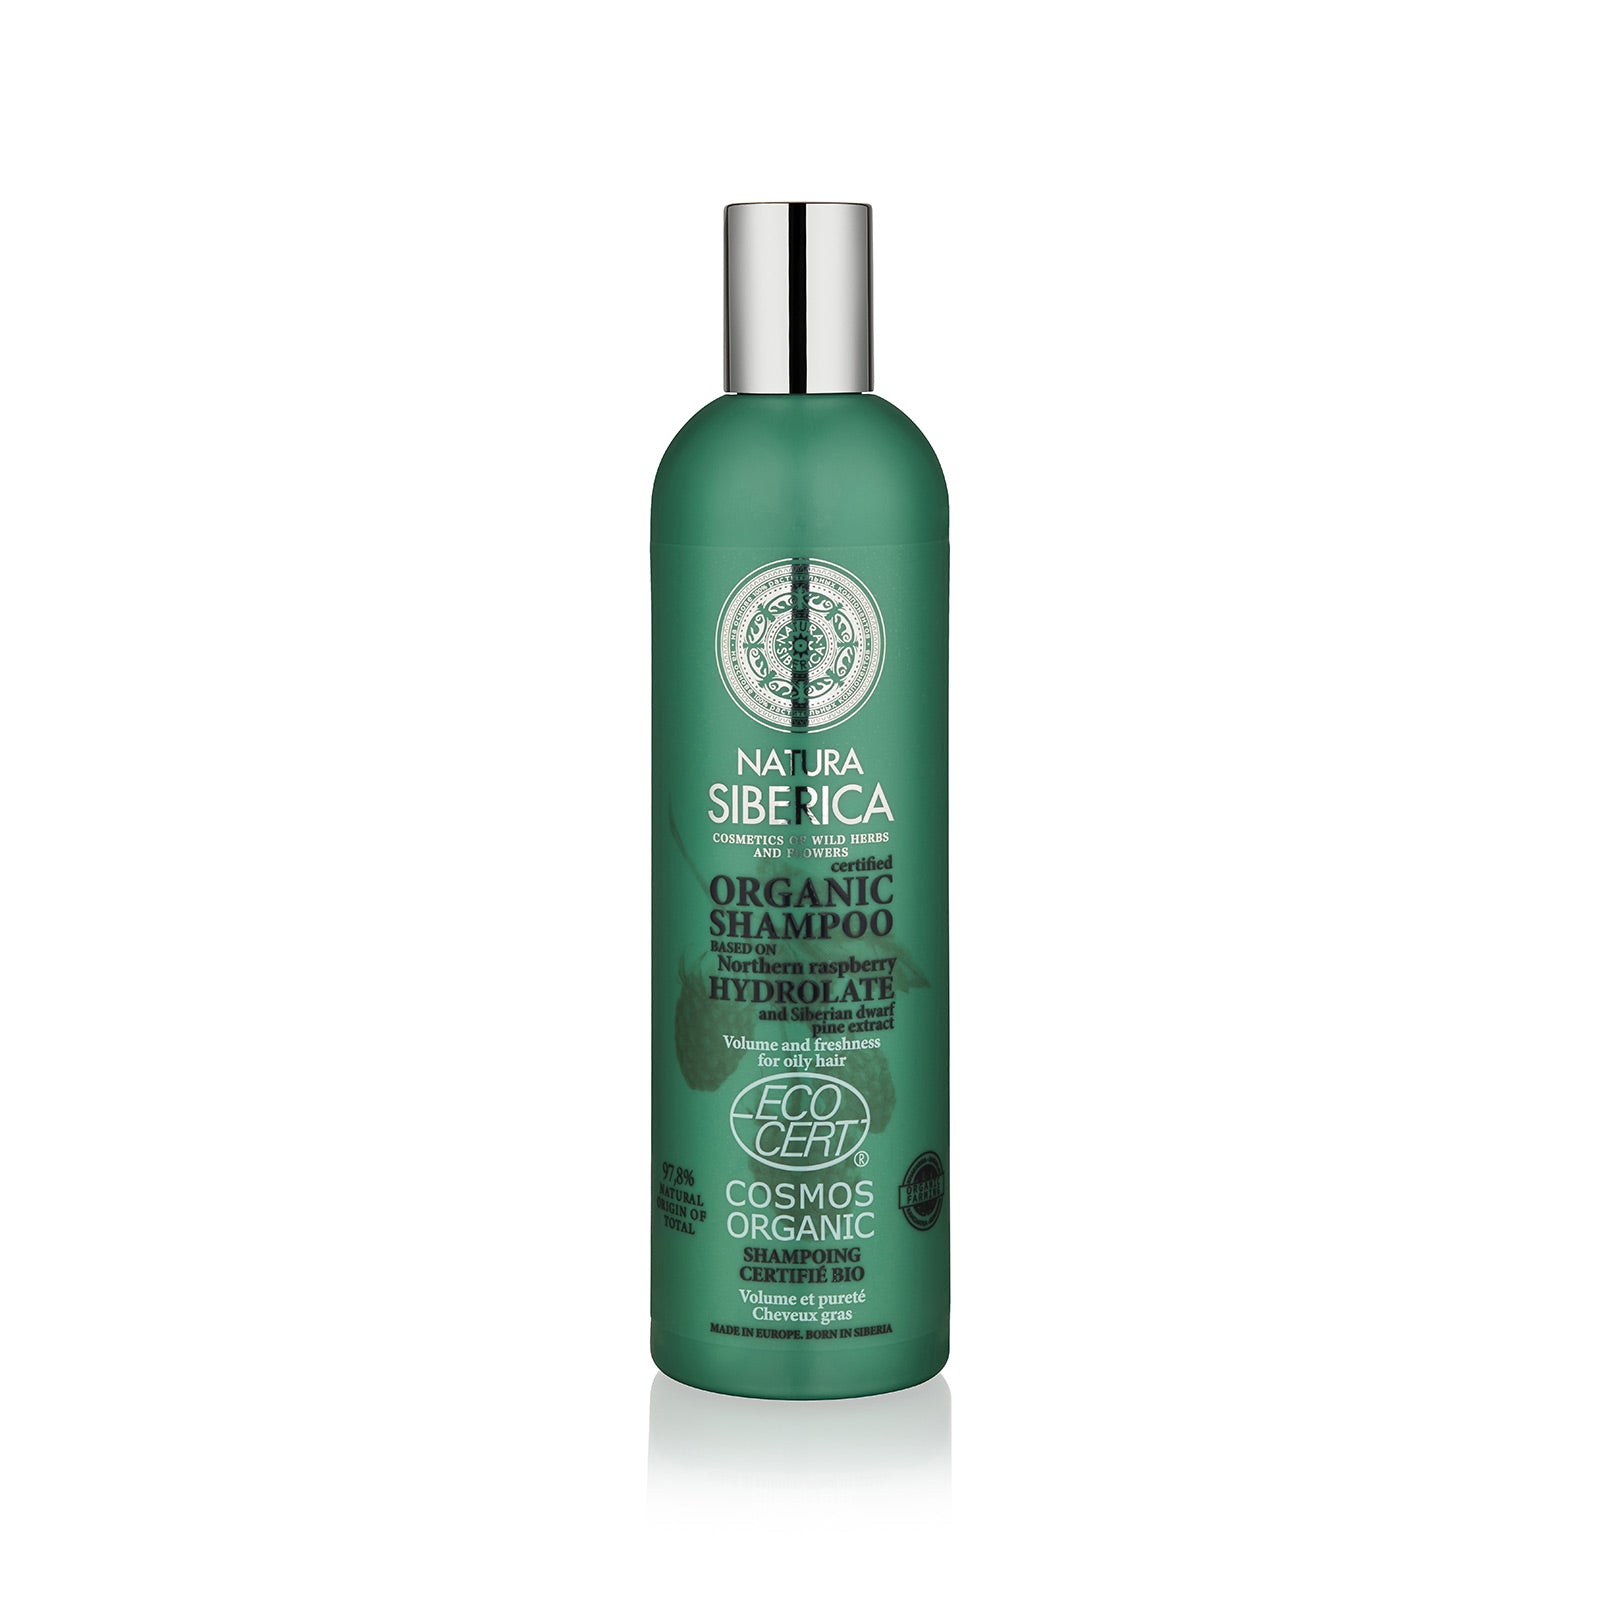 Volume and Freshness Shampoo. For oily hair, 400 ml